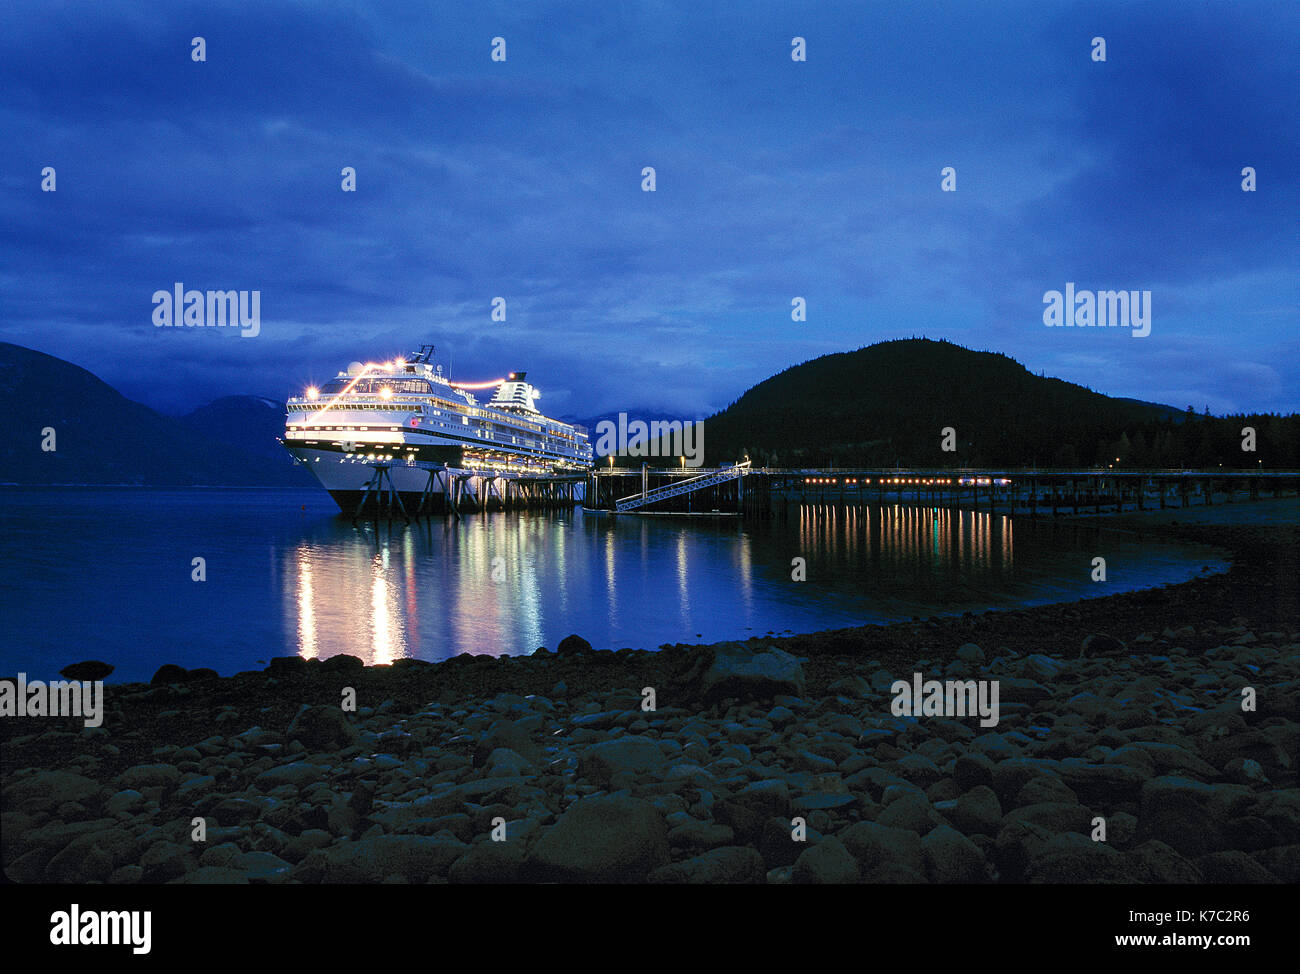 United States of America. Alaska. Haines. Floodlit cruise ship at quayside at night. Stock Photo